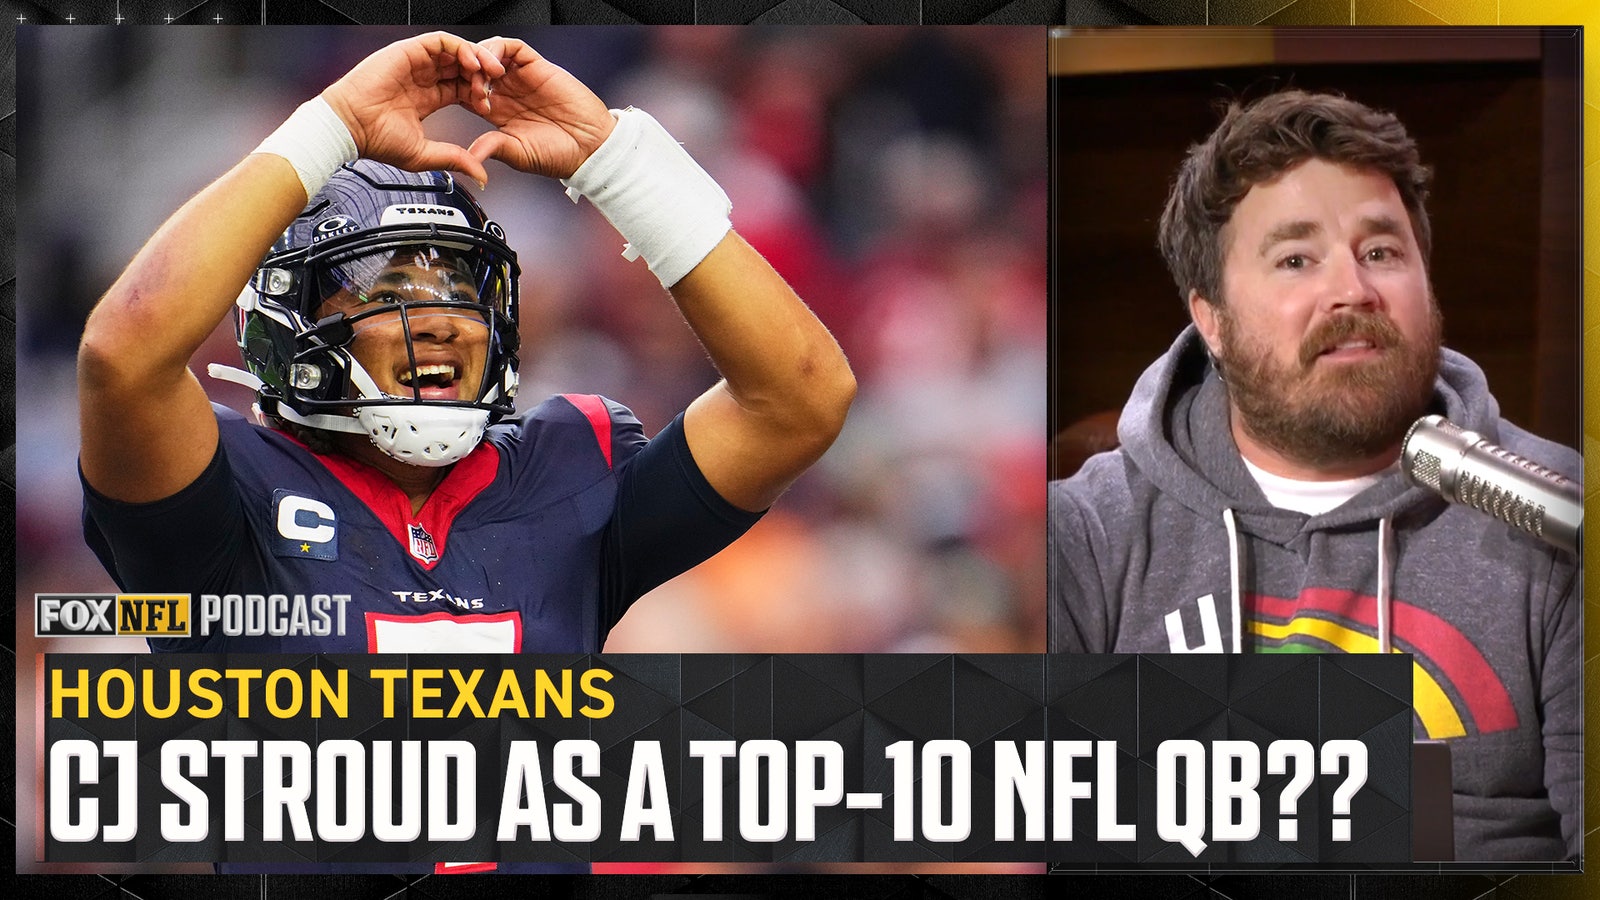 Is Texans rookie C.J. Stroud already a top-10 NFL QB? 